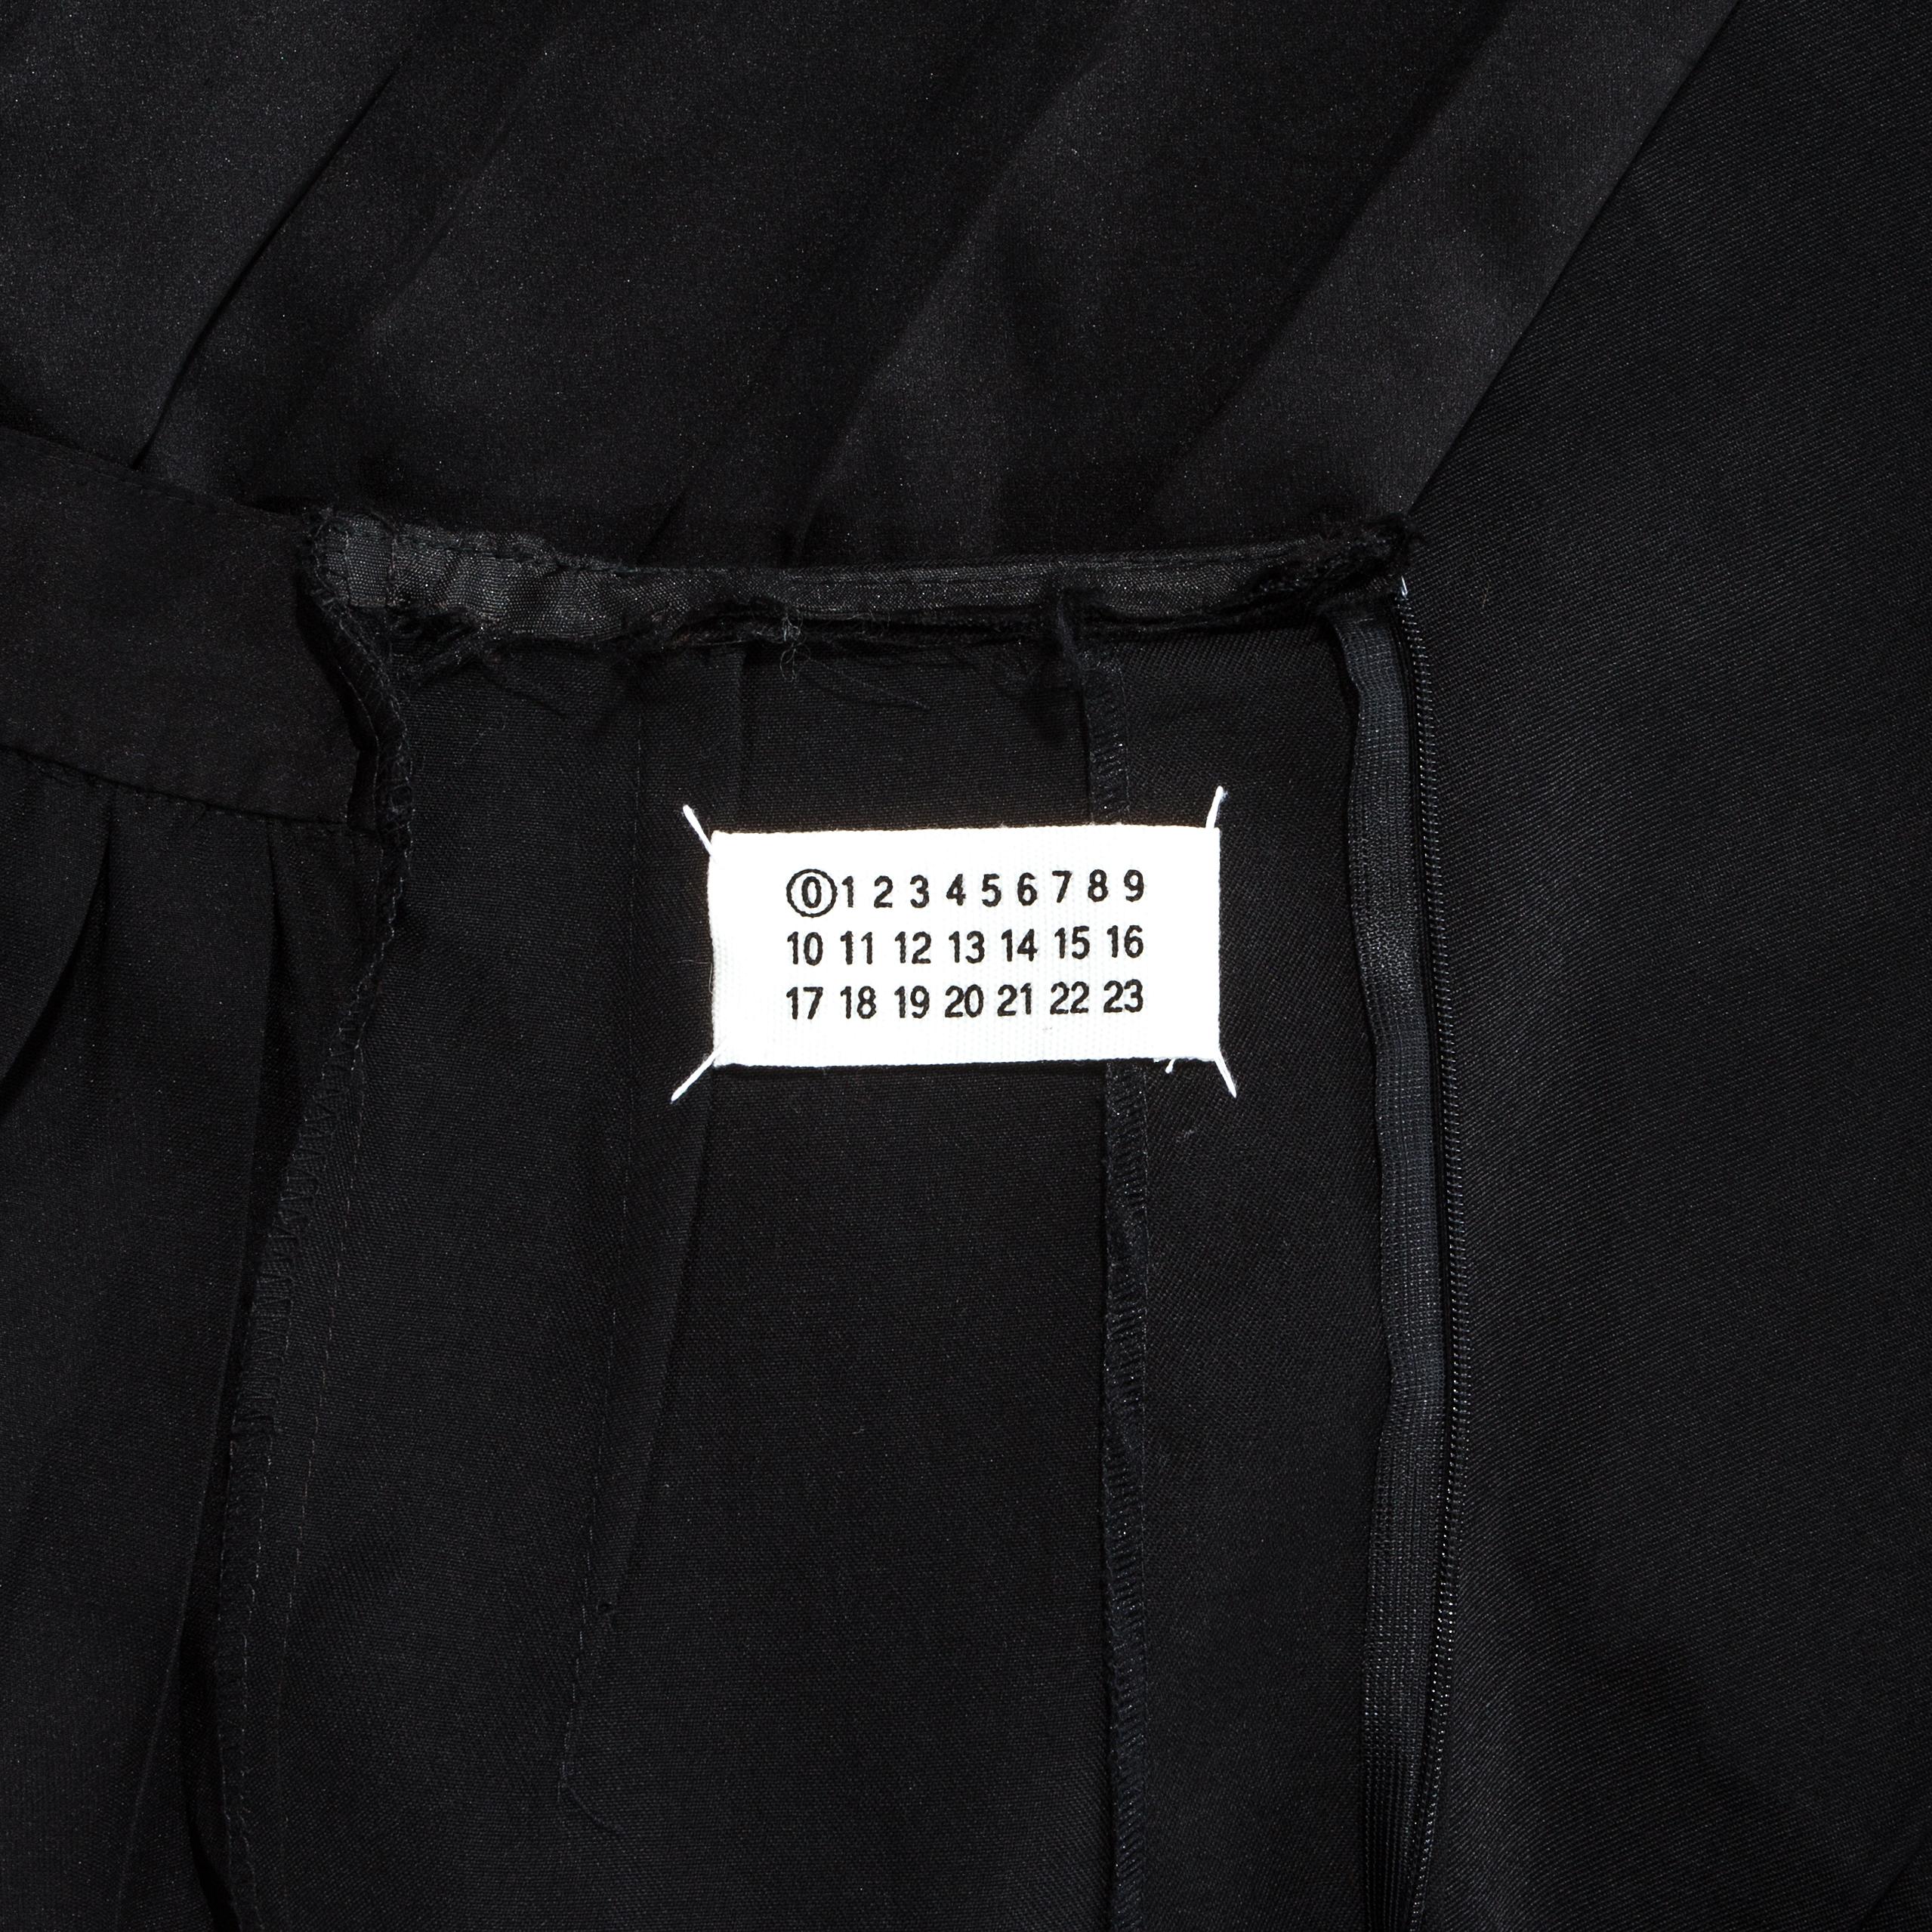 Margiela Artisanal black glove top and pleated skirt runway ensemble, ss 2001 5